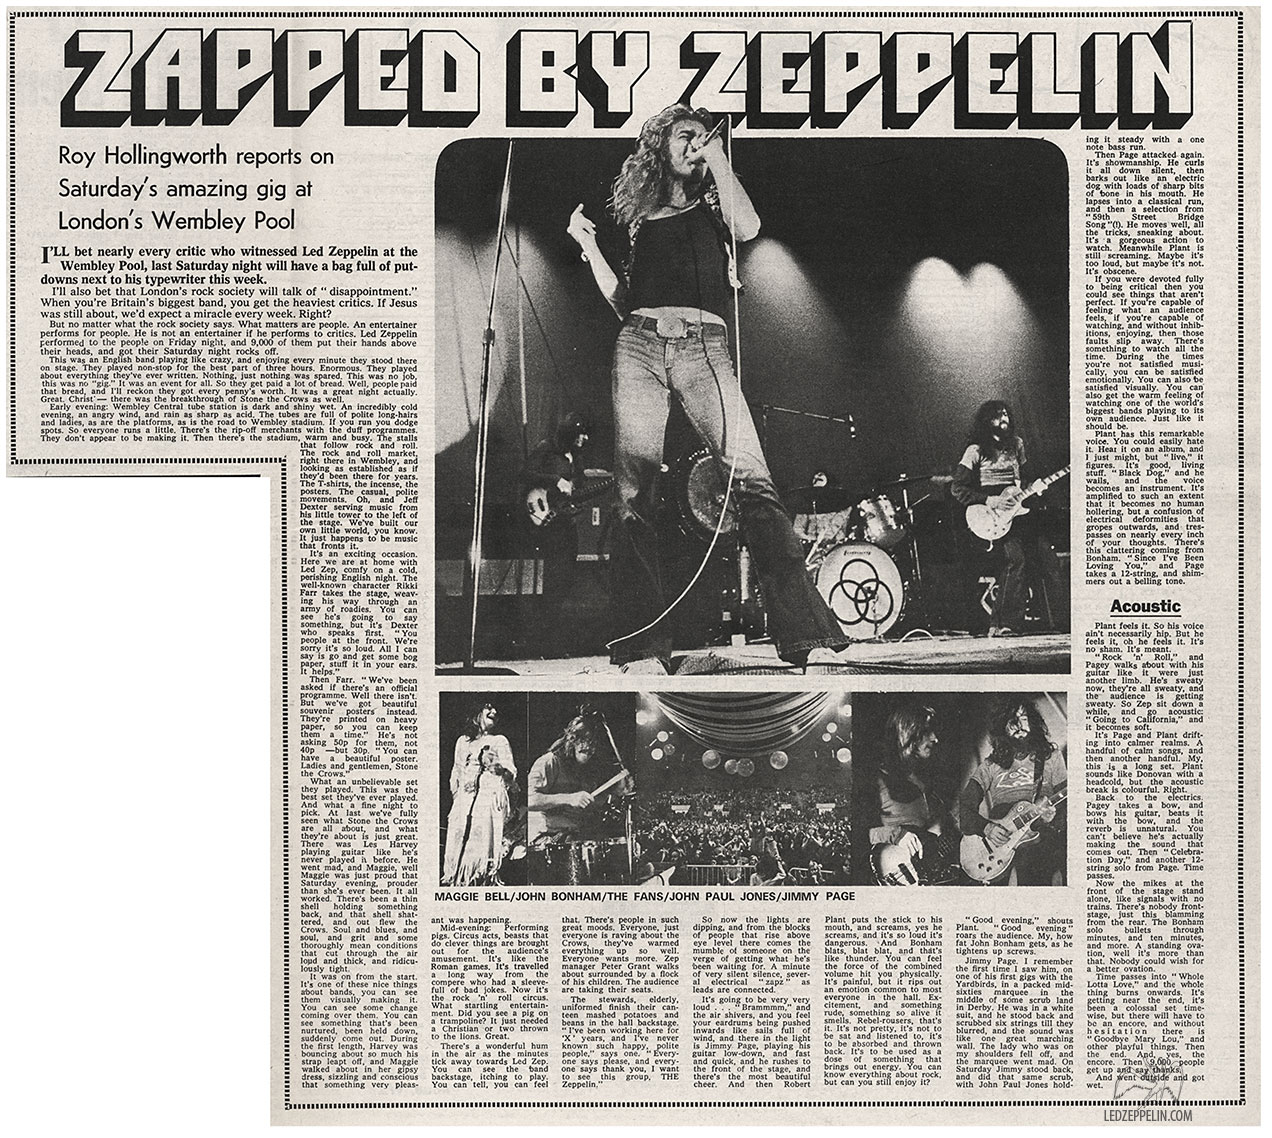 Wembley Empire Pool - November 20, 1971 / London | Led Zeppelin